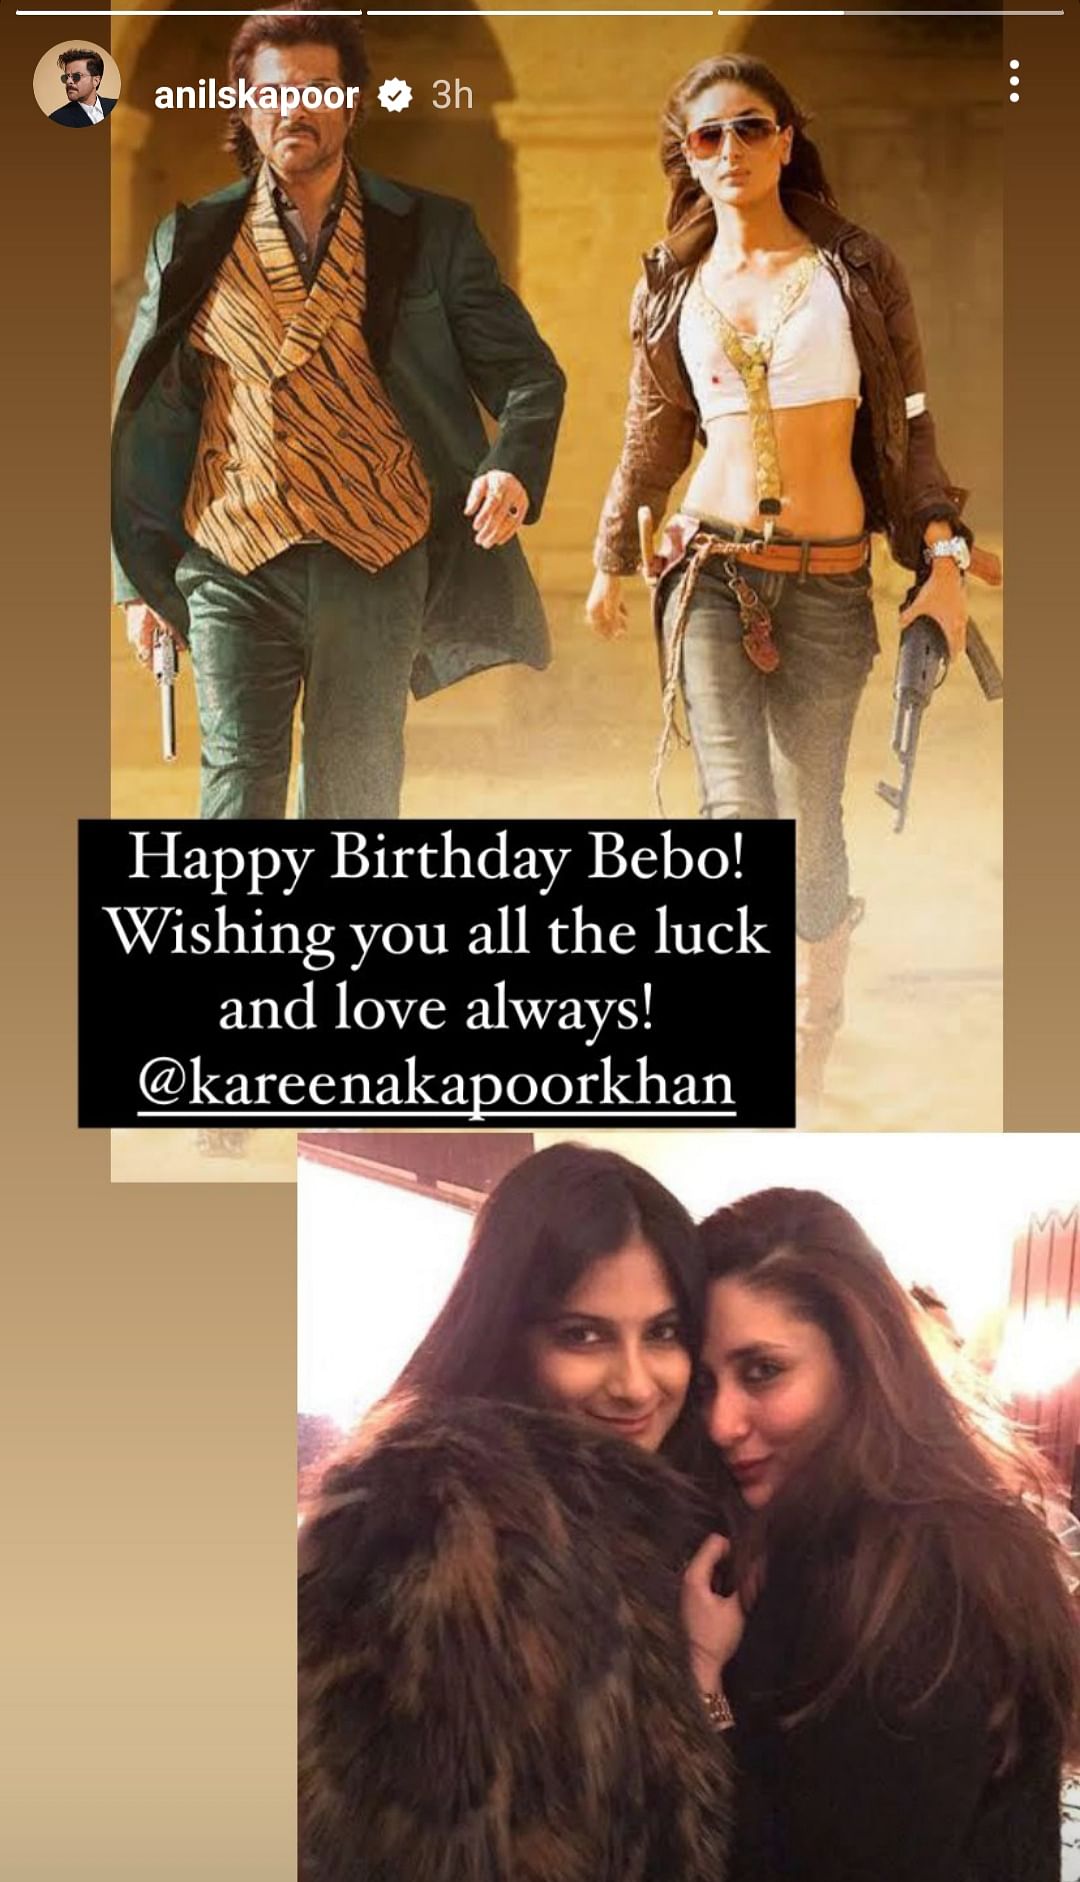 Kareena Kapoor Khan turns 42 today.